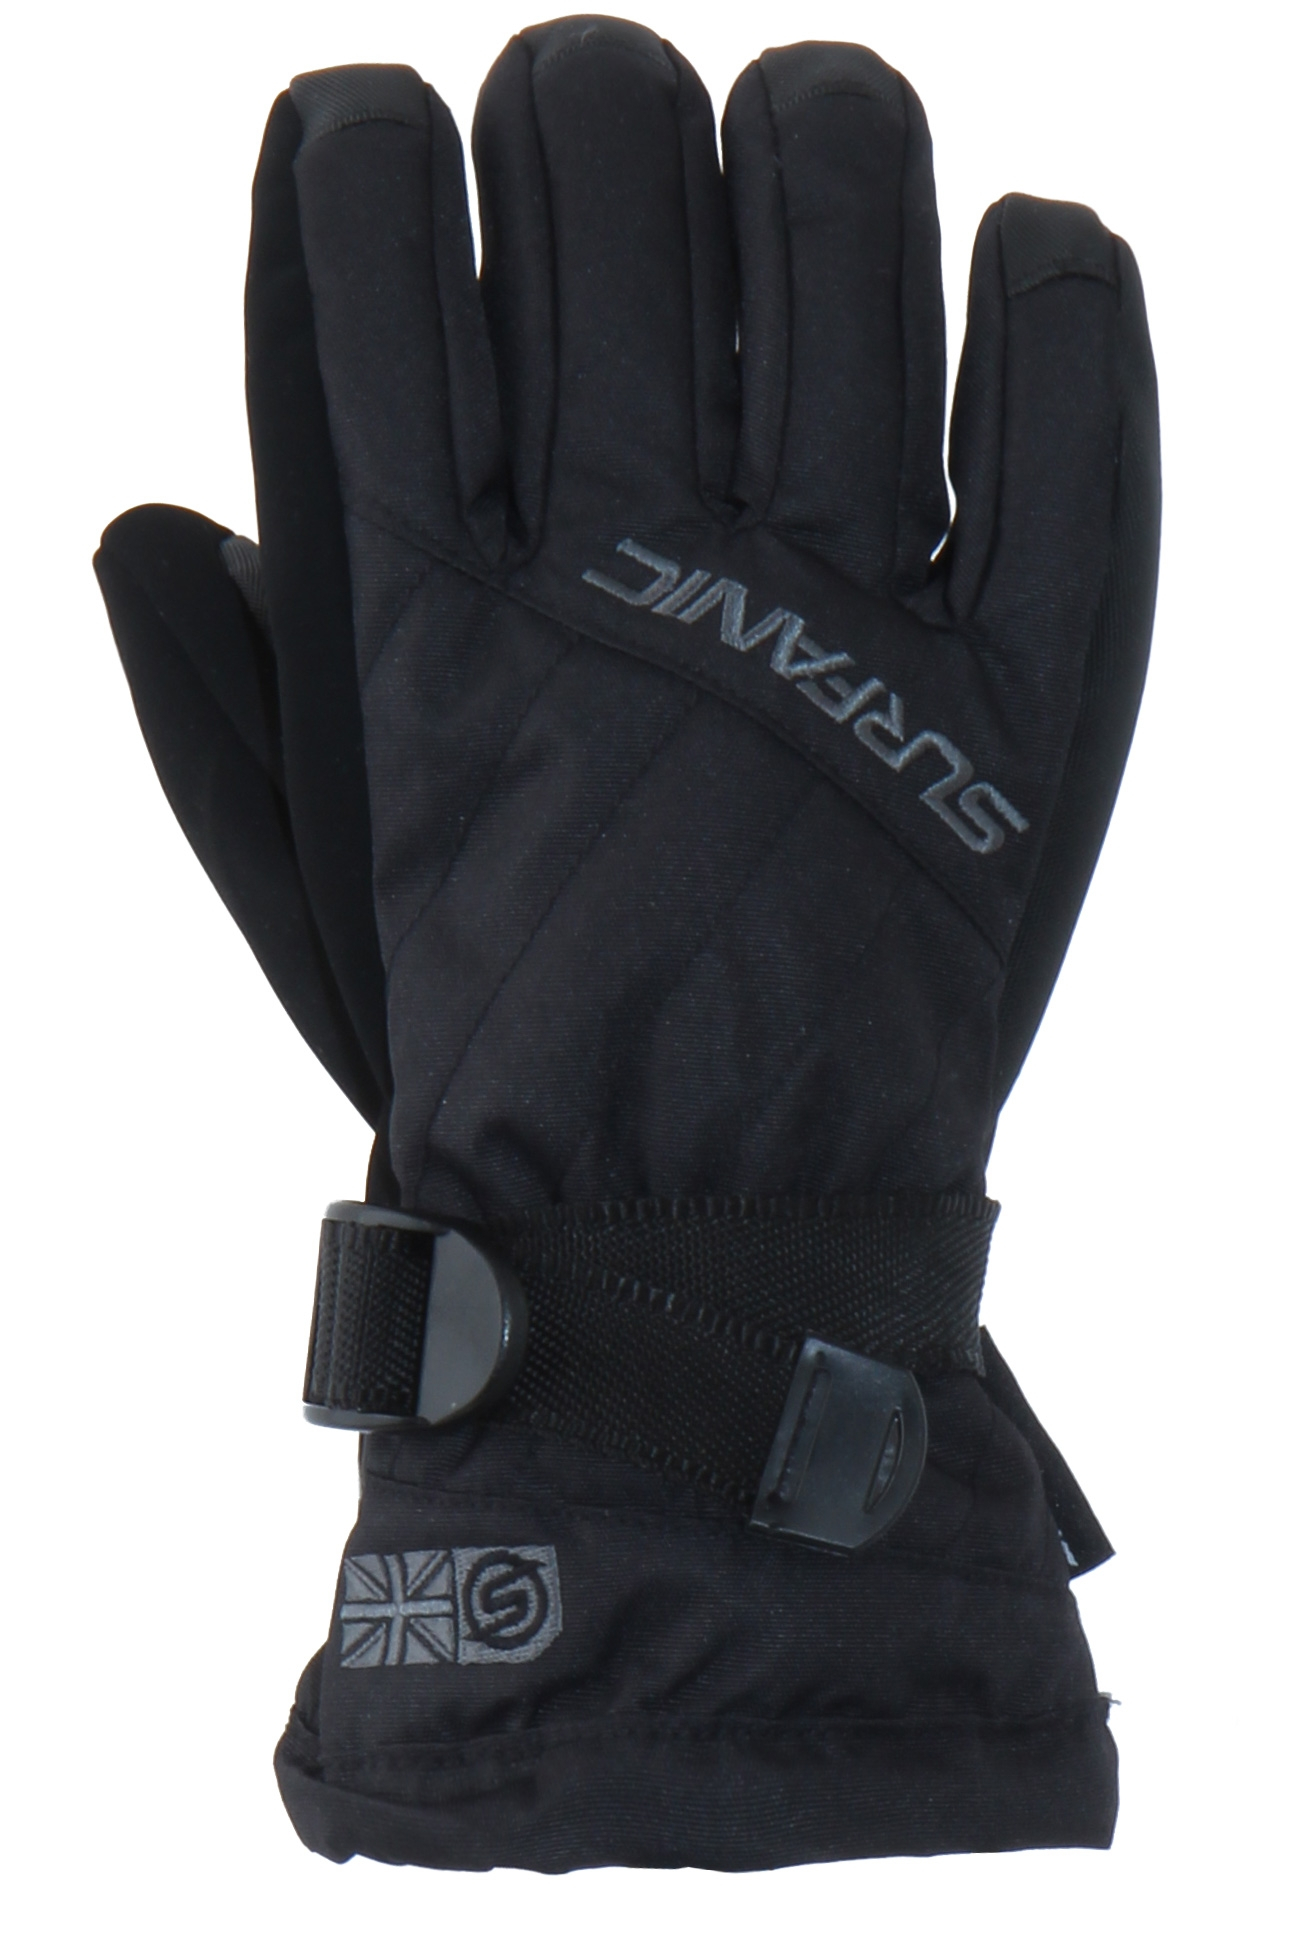 Surfanic Boys Snapper Surftex Glove Black - Size: 7-9